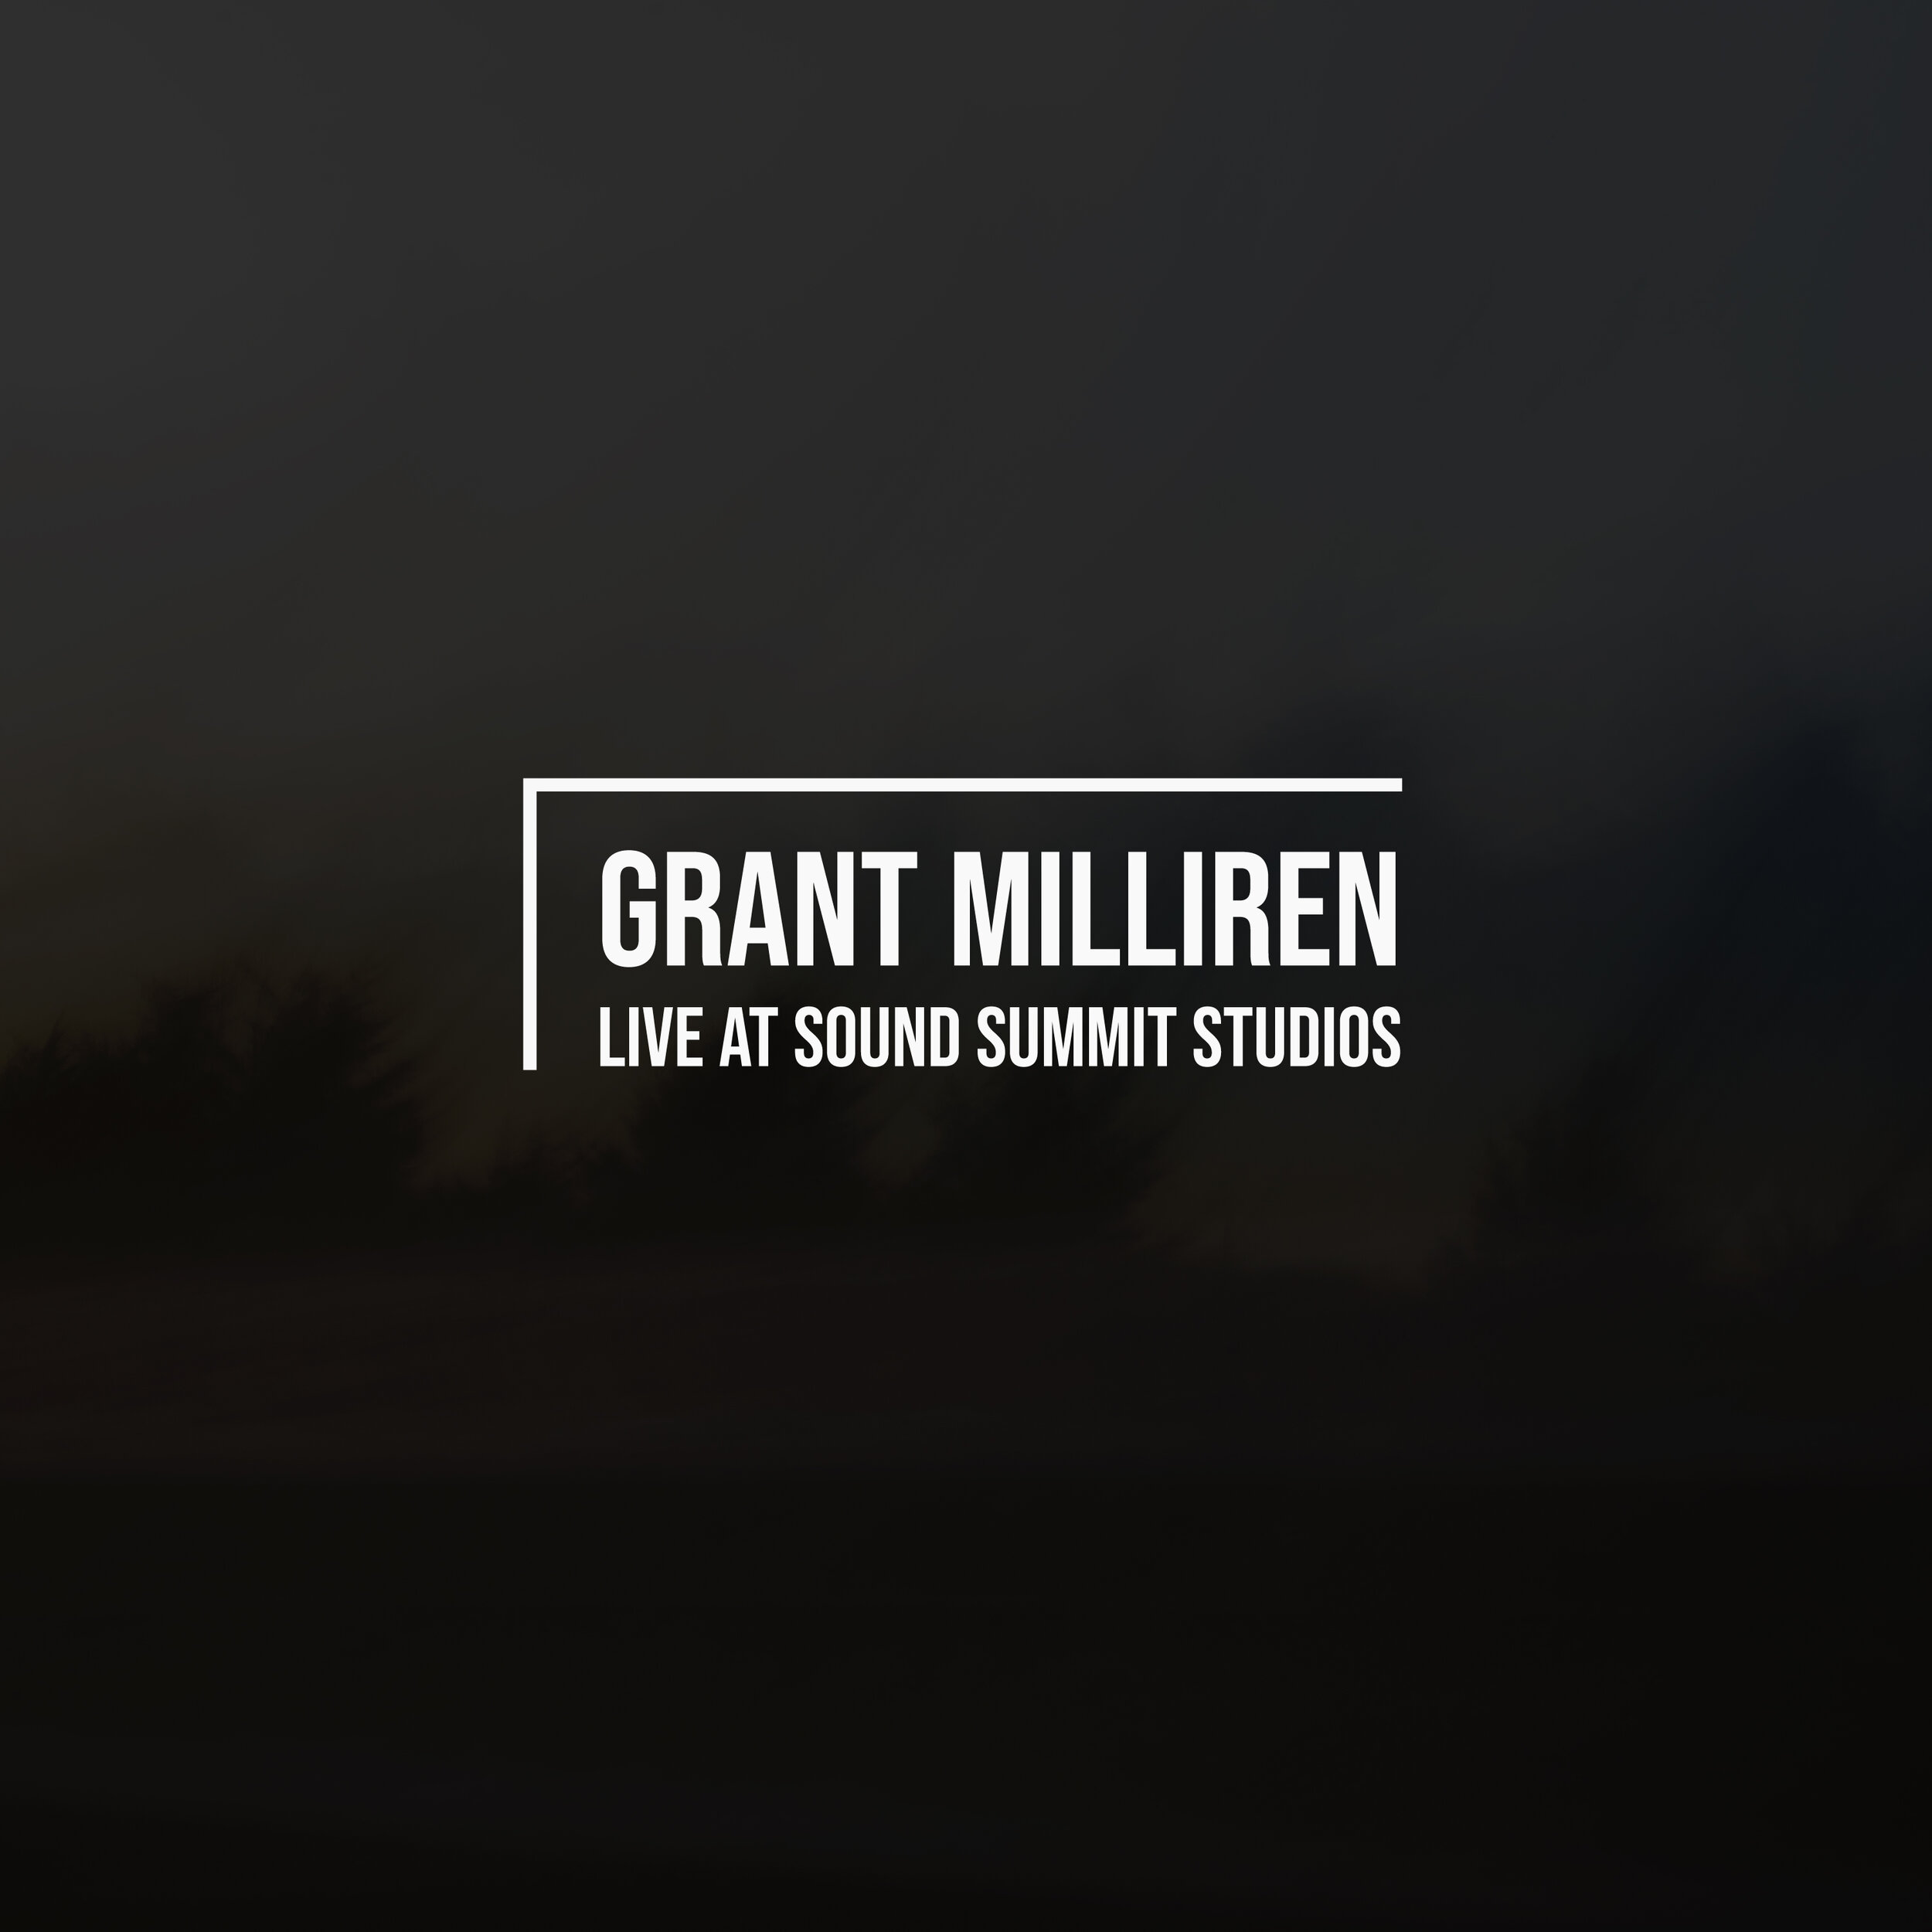 Grant Milliren - Live at Sound Summit Studios